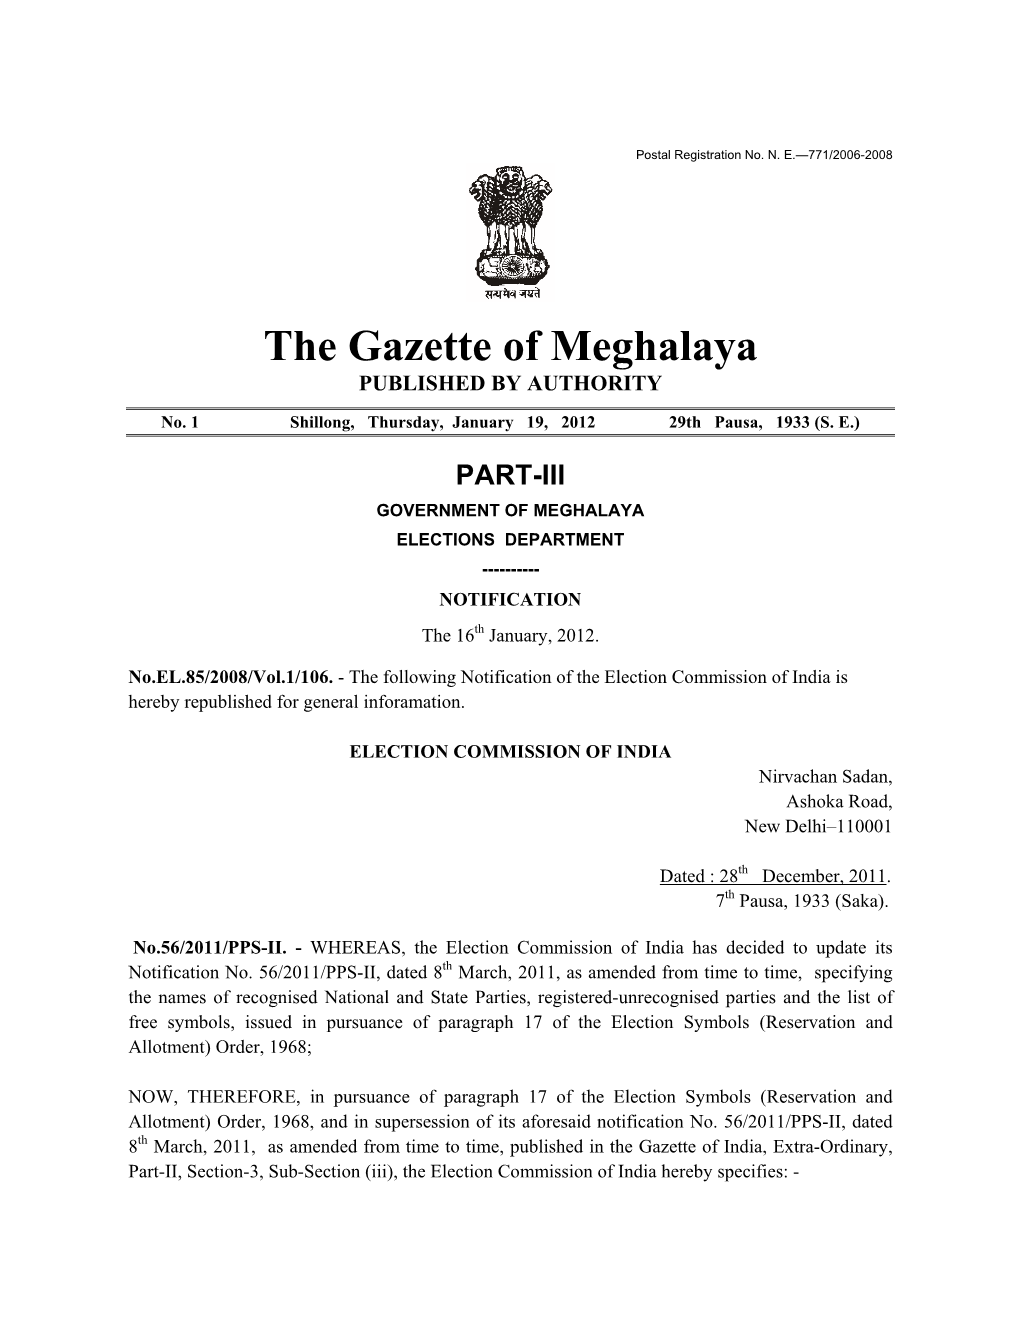 The Gazette of Meghalaya PUBLISHED by AUTHORITY